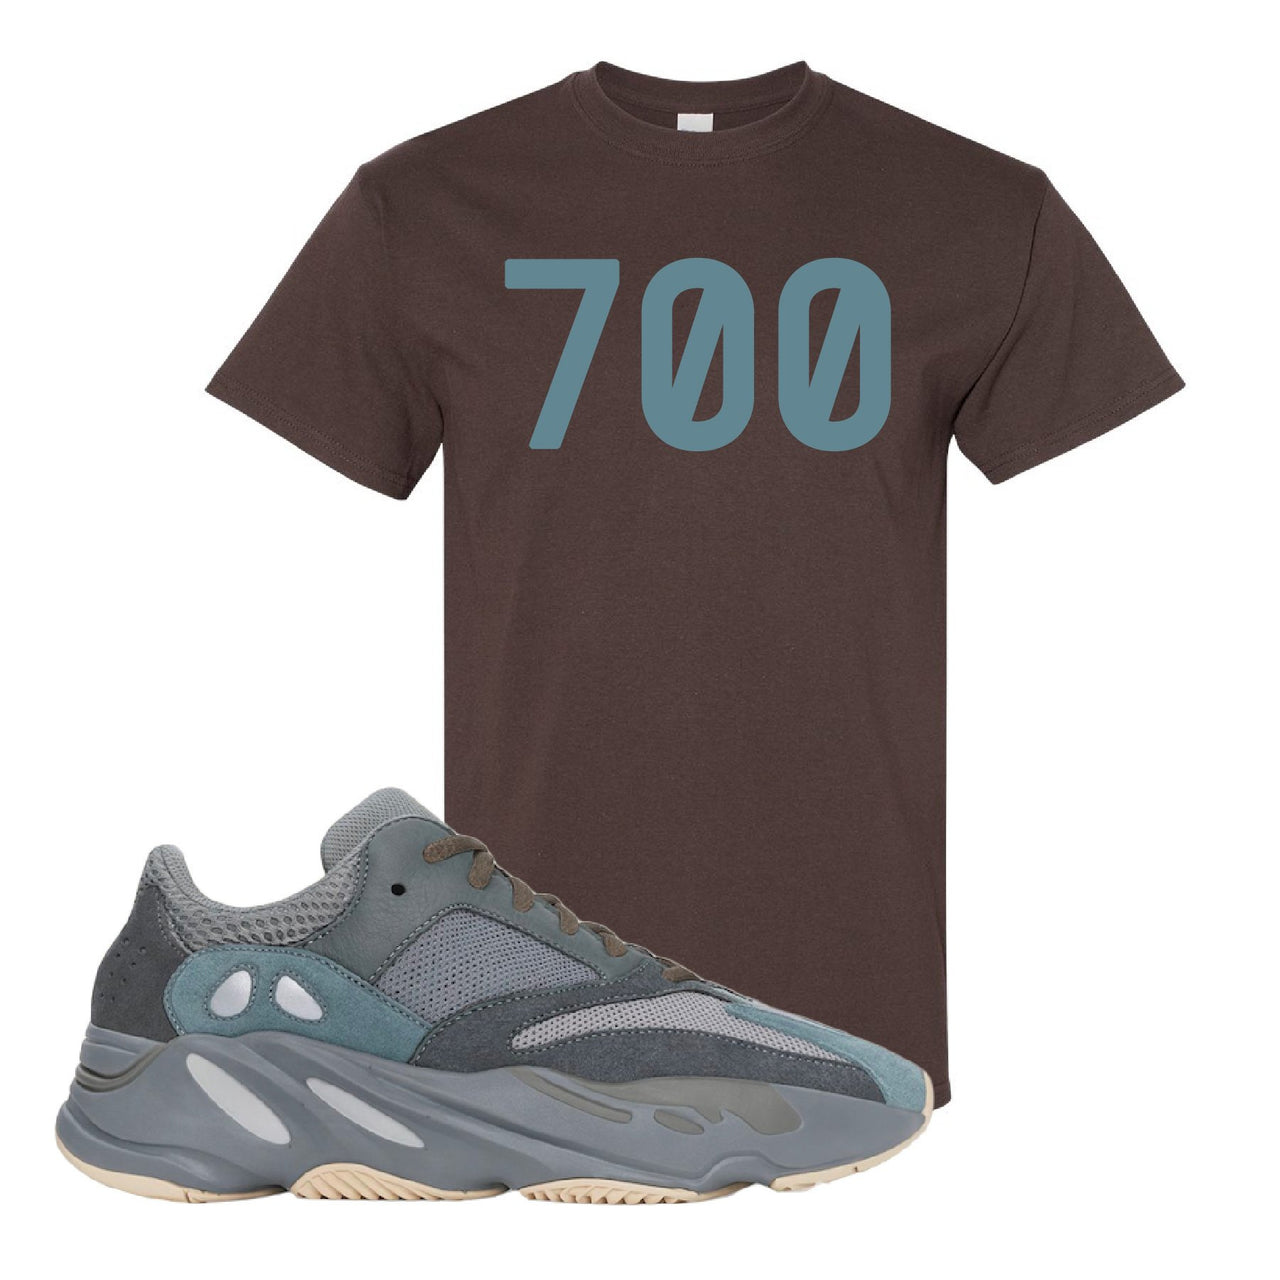 Yeezy Boost 700 Teal Blue 700 Dark Chocolate Sneaker Hook Up T-Shirt